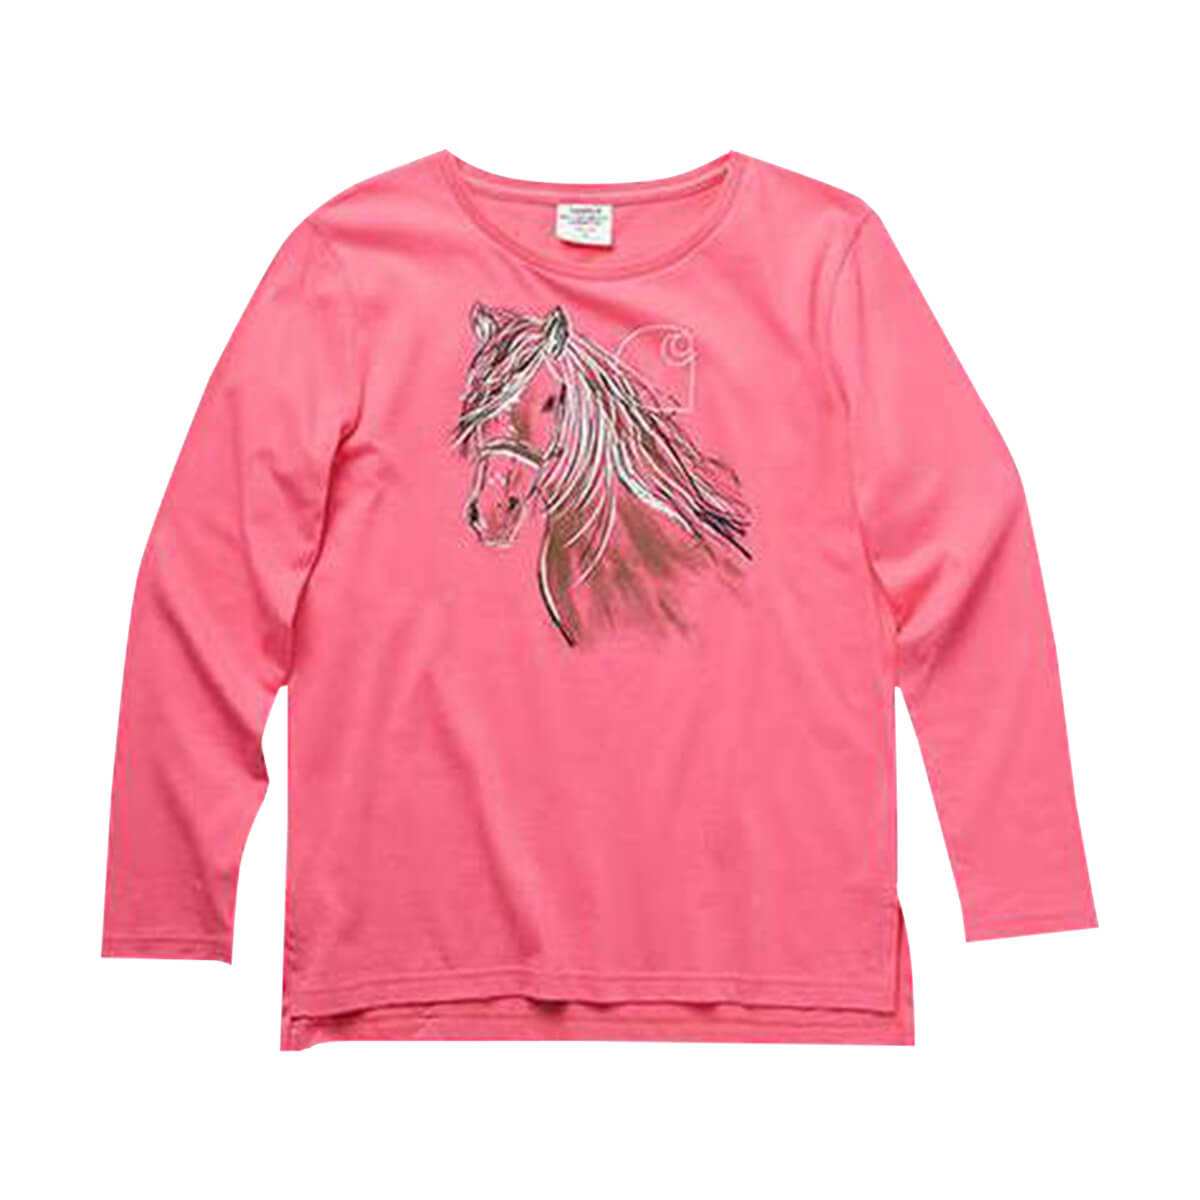 Carhartt Girls Long Sleeve Crewneck Horse Graphic Tee - Pink